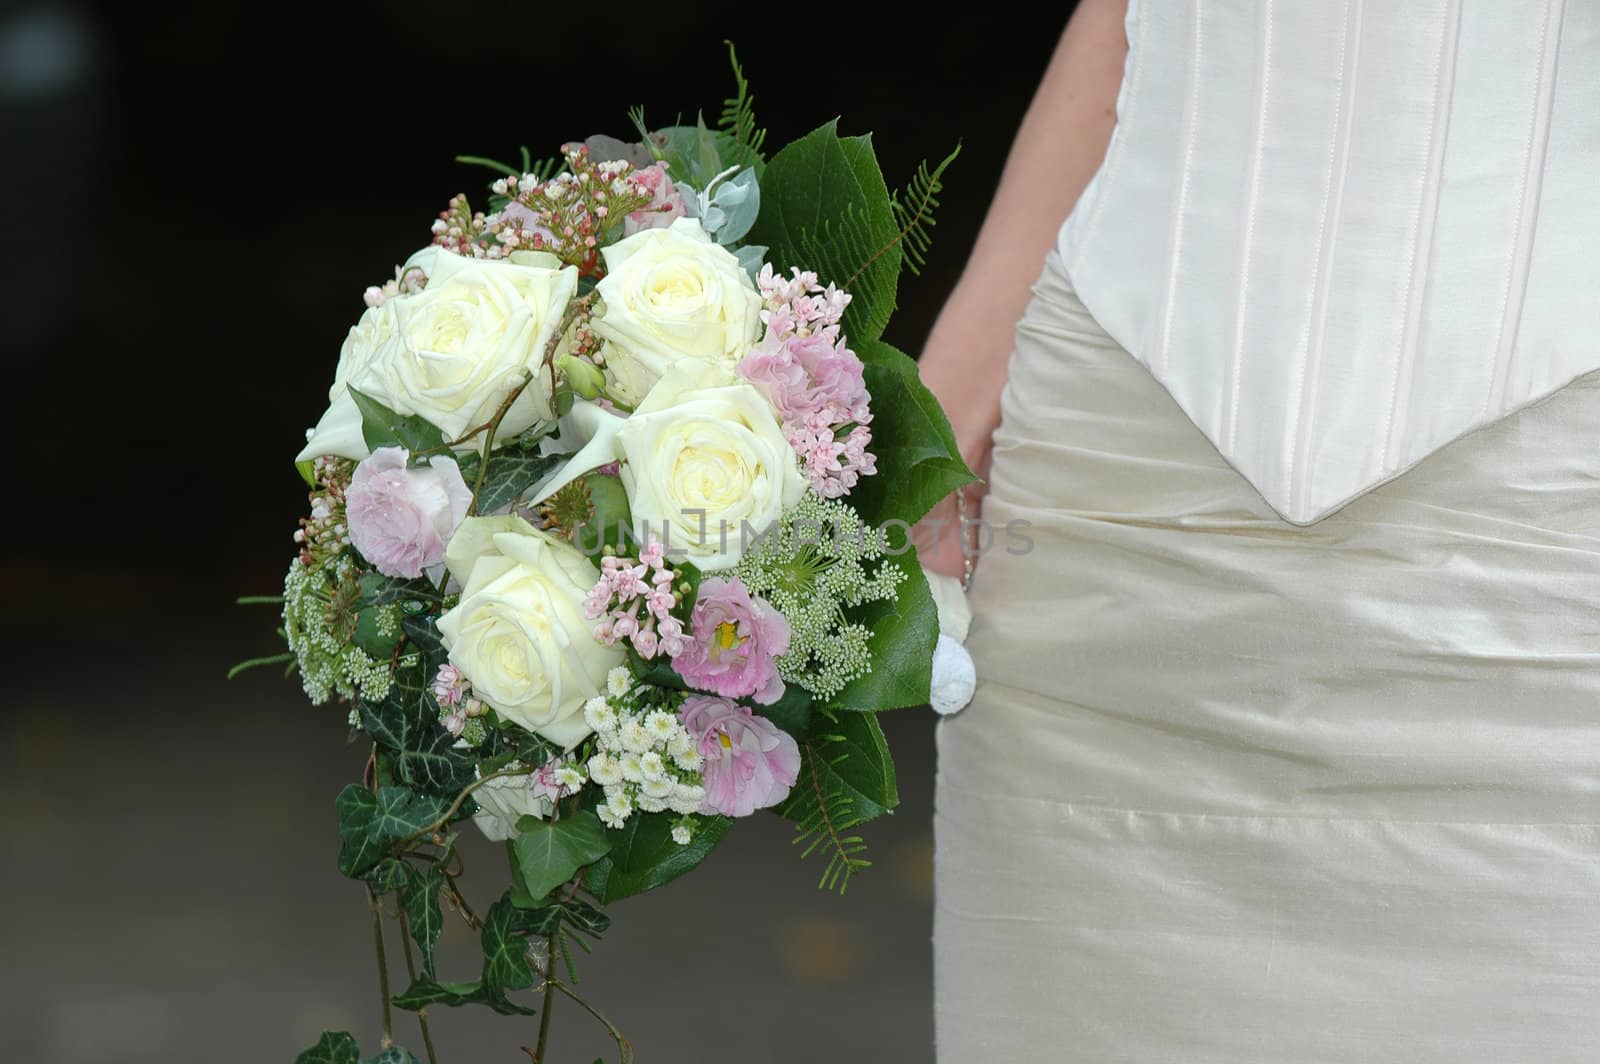 Bride and bouquet by cfoto